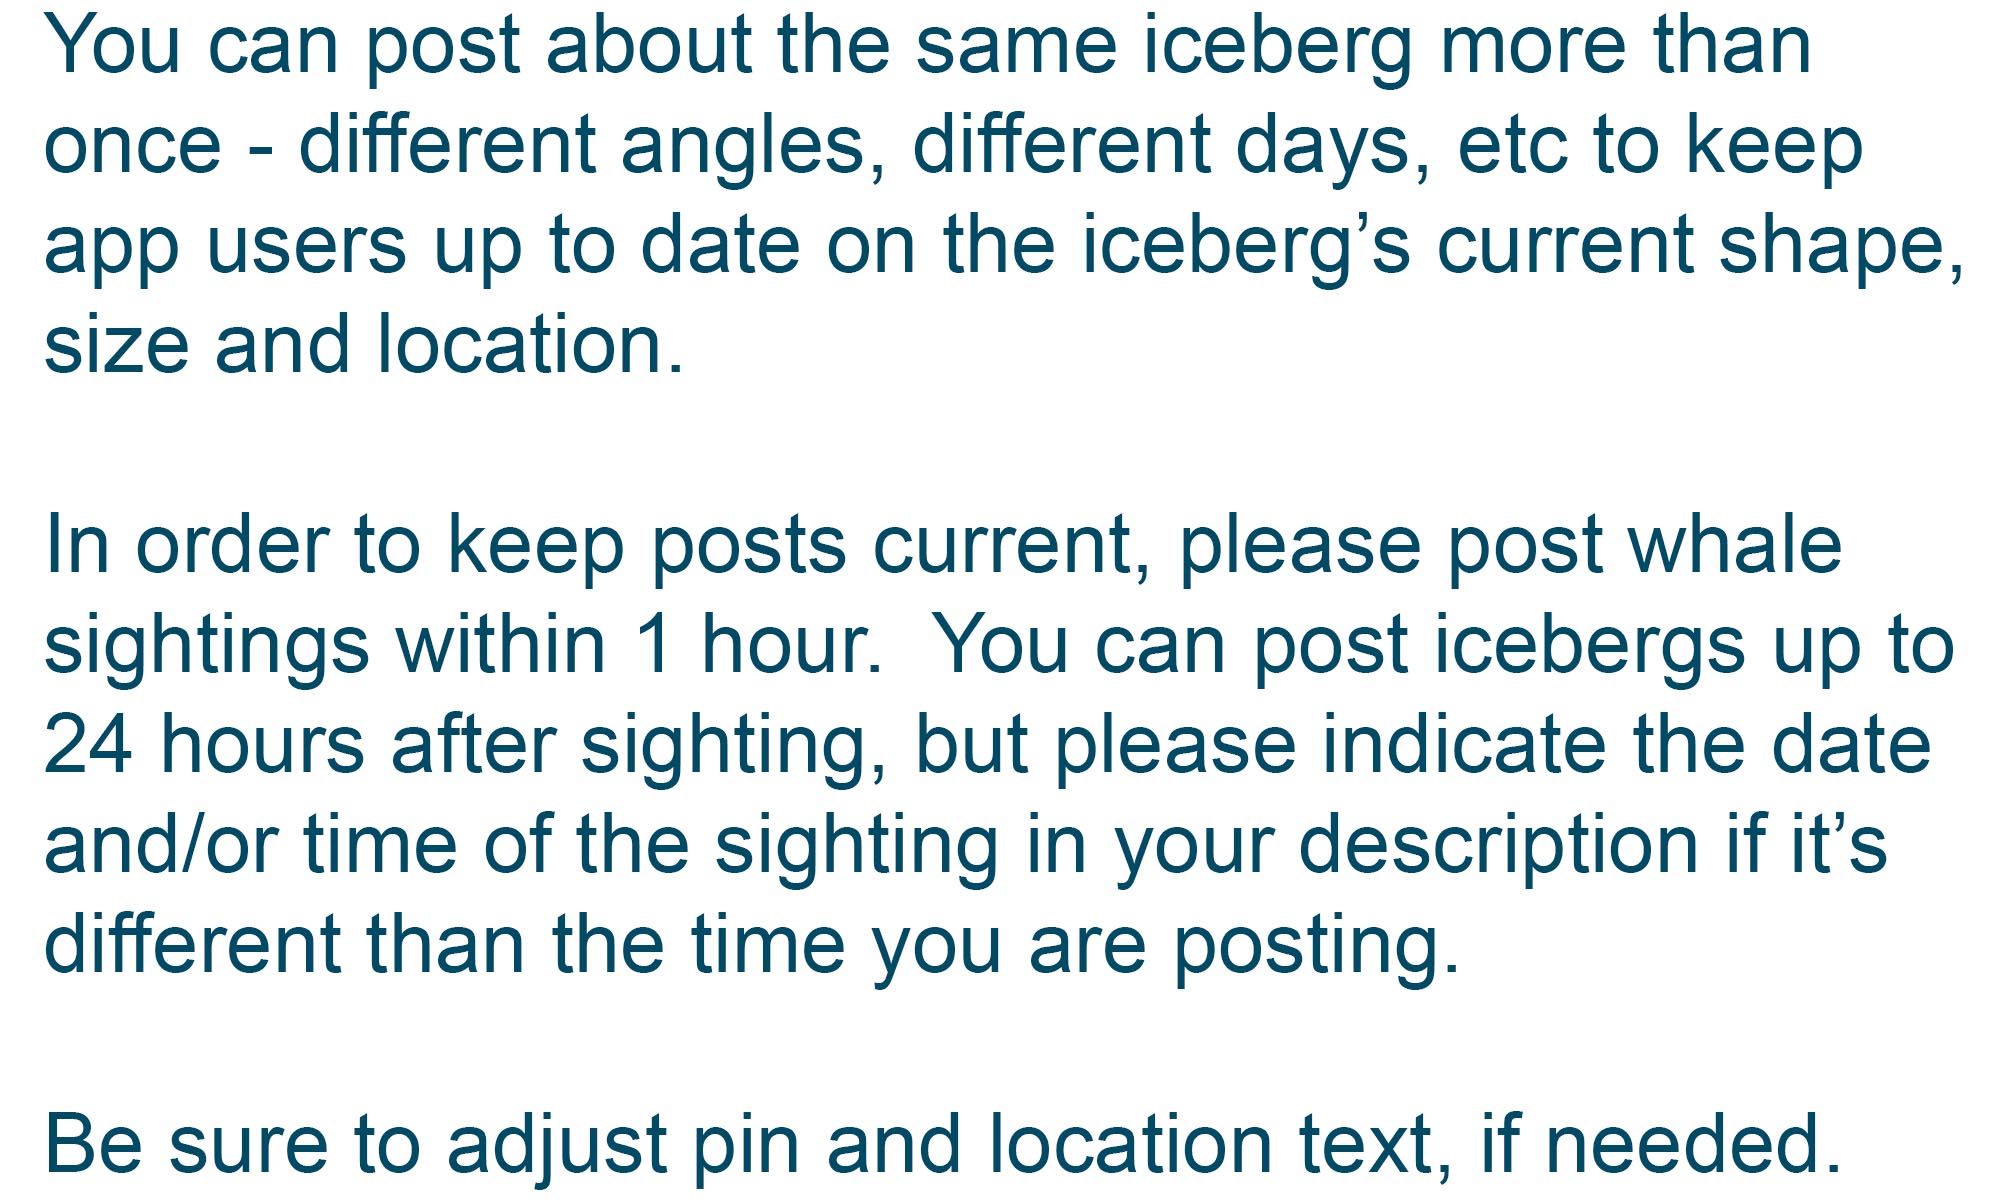 icebergfinder, iceberg alley, whale sightings, icebergs, Newfoundland, NL